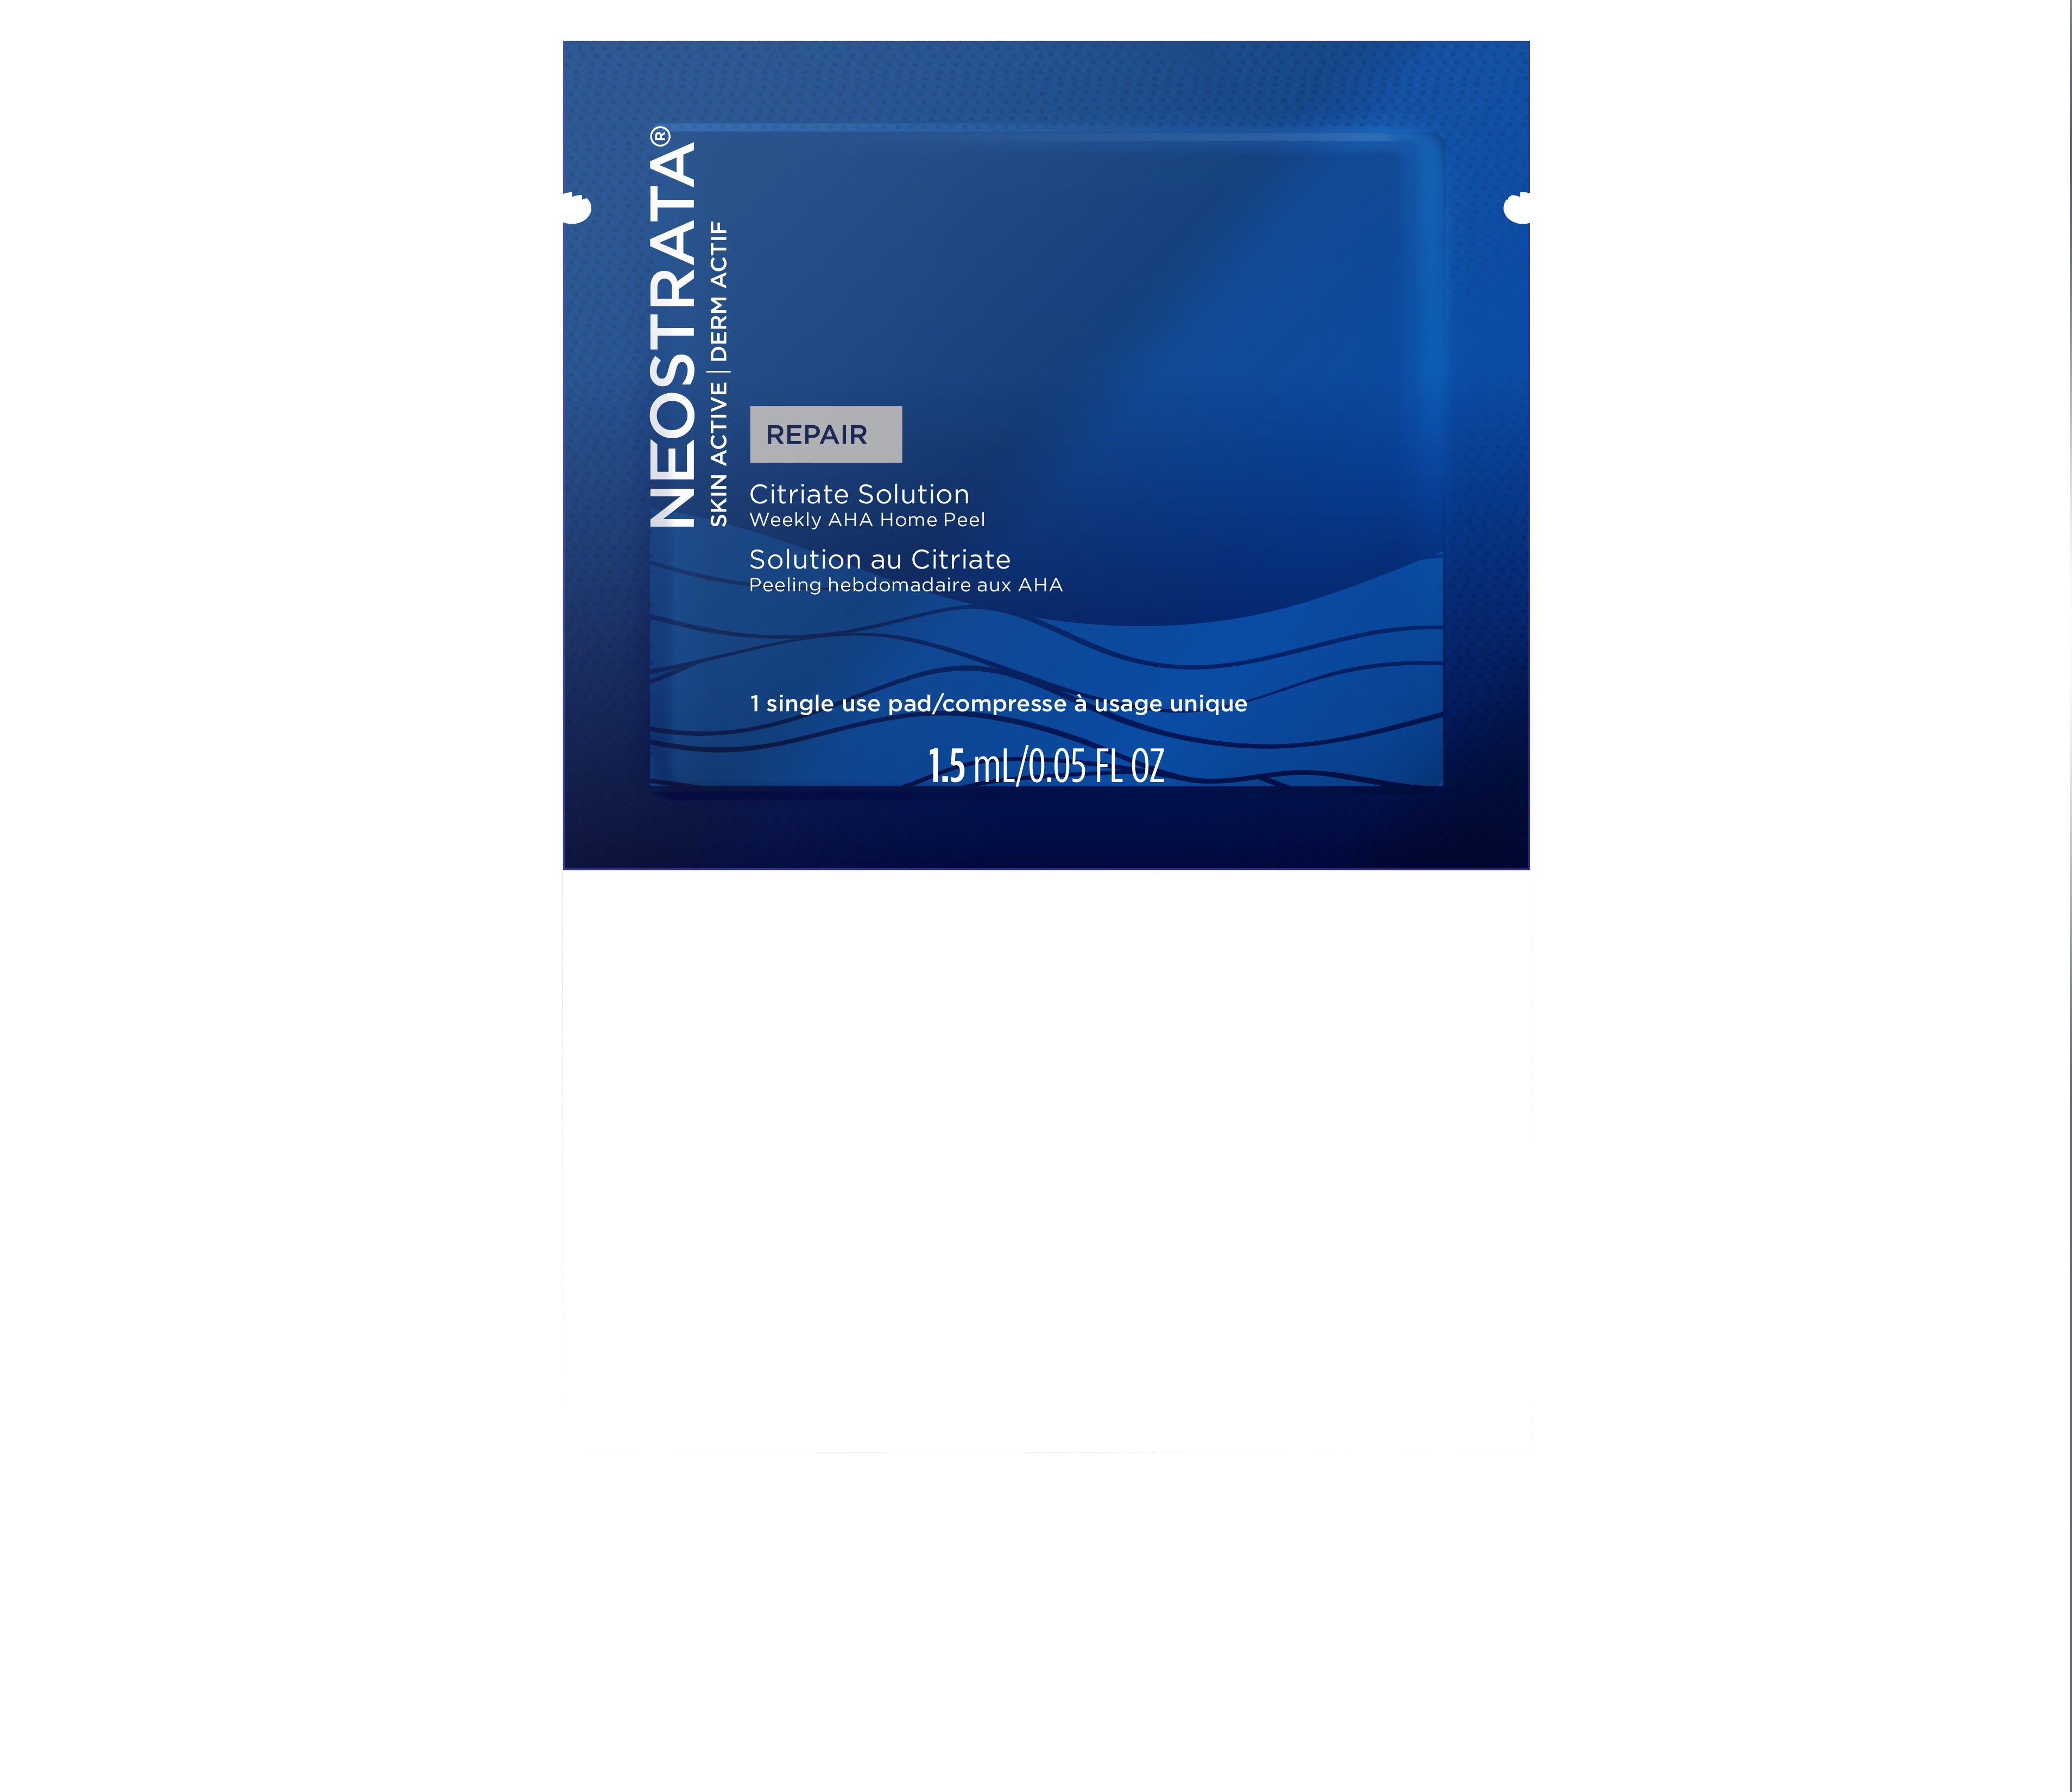 NeoStrata | Skin Active REPAIR  Citriate Solution pad (1.5ml single pad)